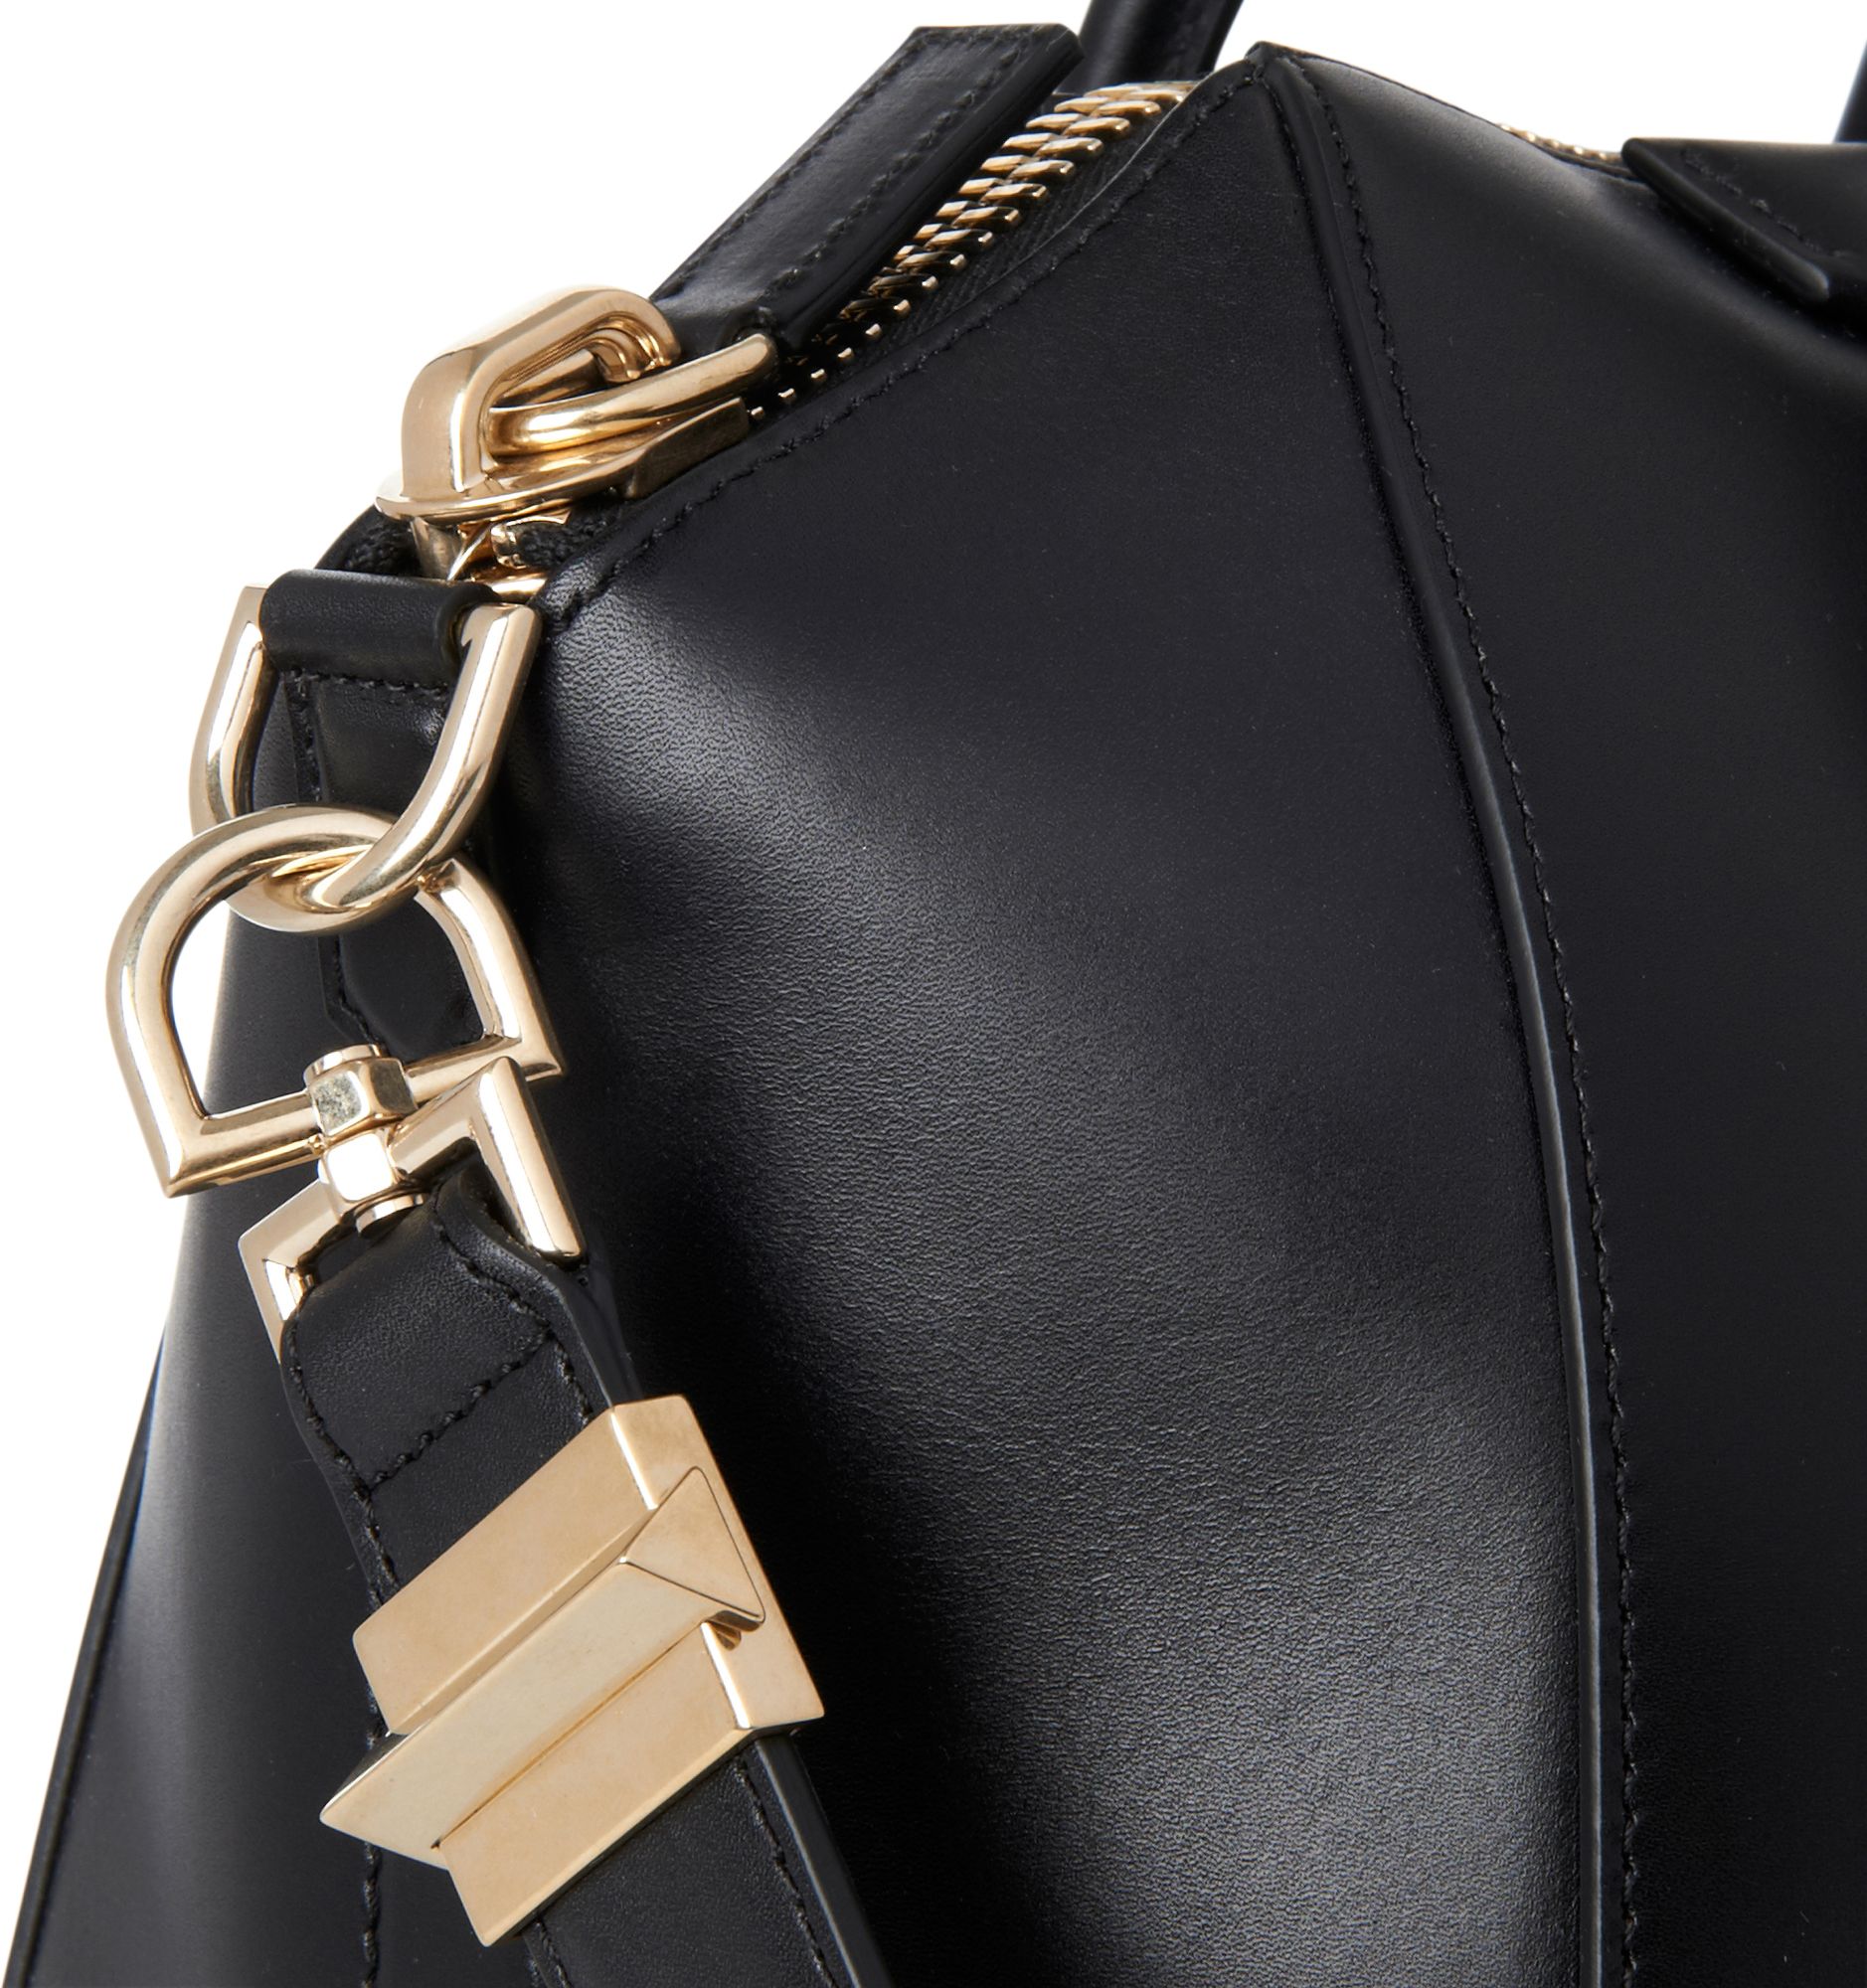 Givenchy Antigona Medium Smooth Leather Tote in Black | Lyst